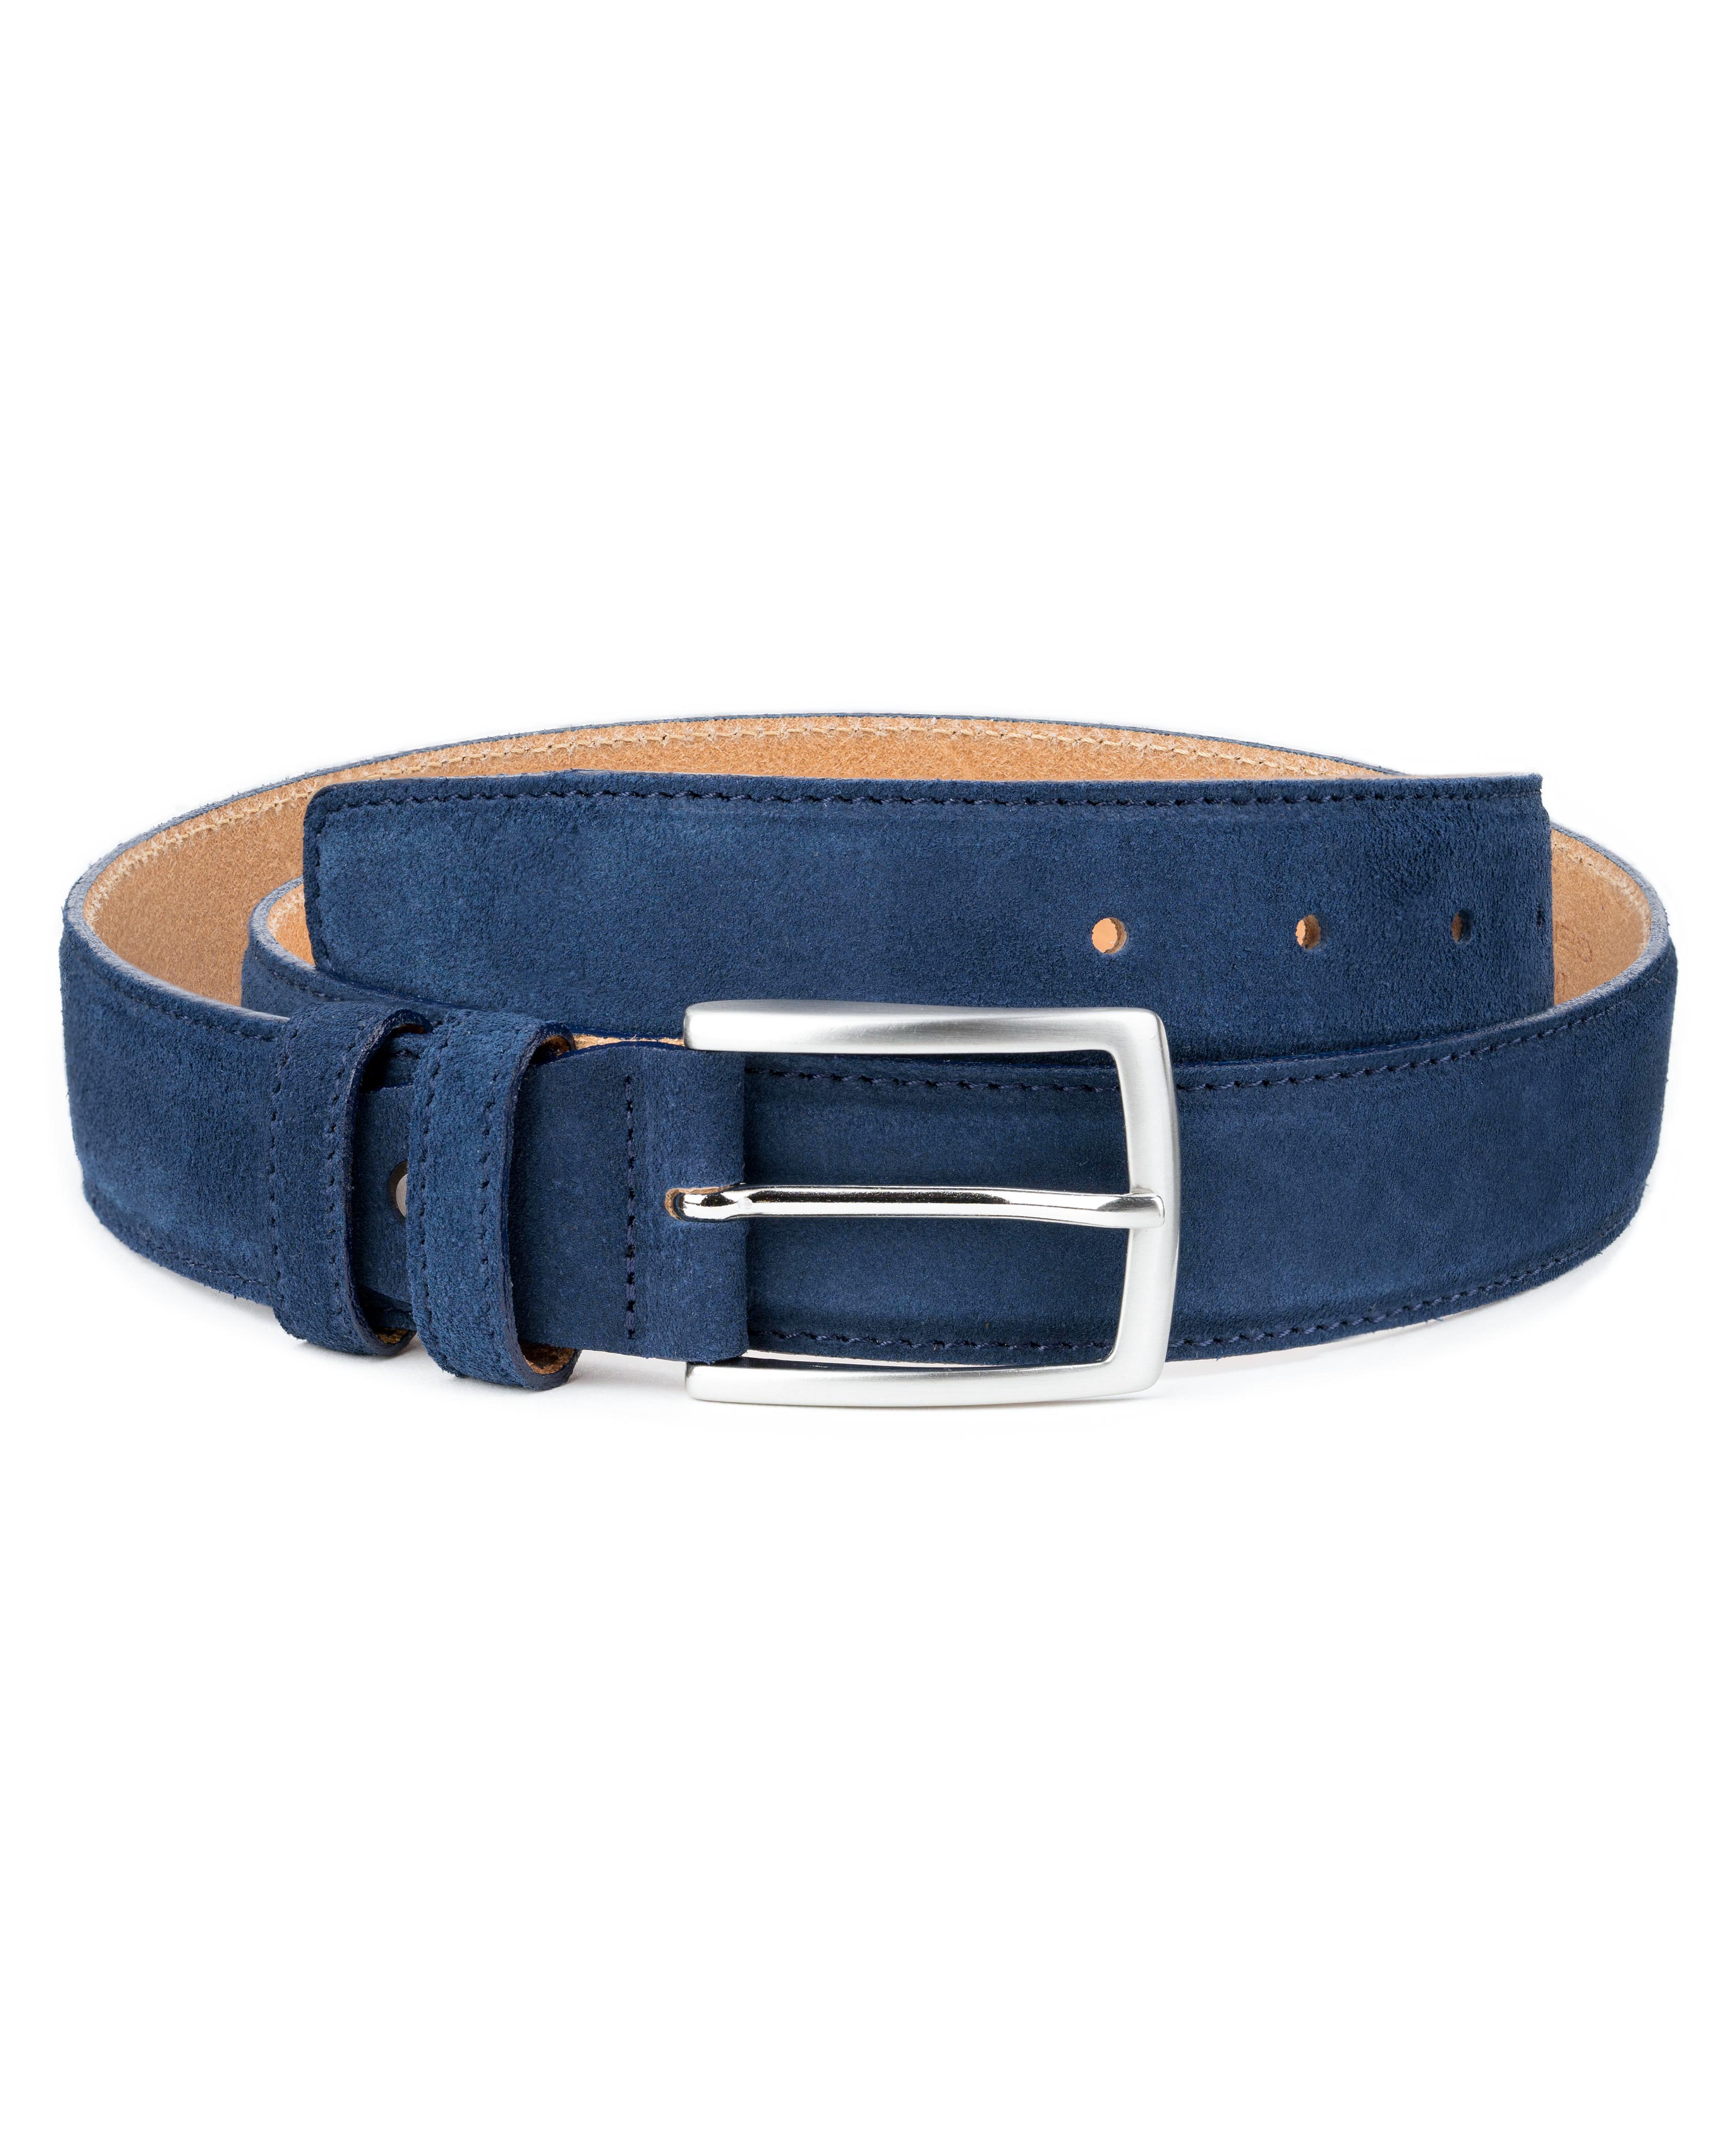 Dark Blue Suede Belt Men's belts Genuine Italian Leather Navy casual Capo Pelle